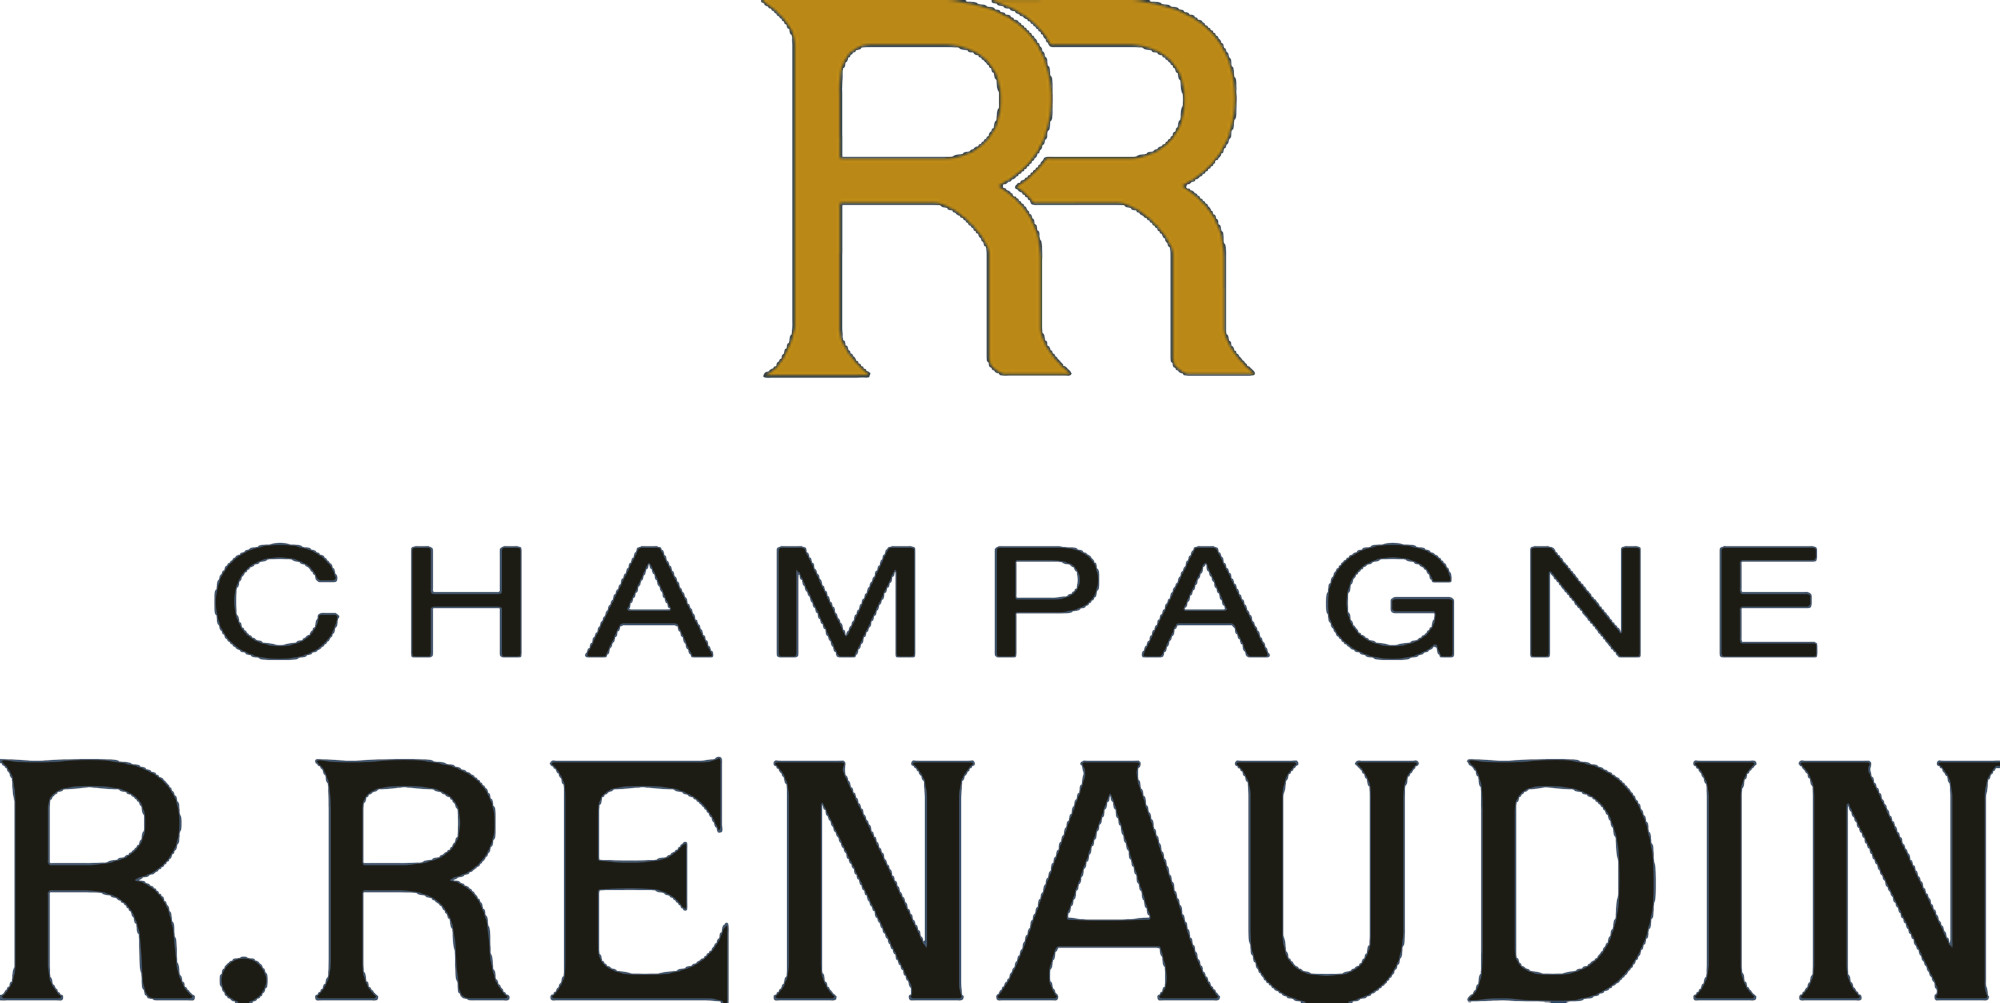 Champagne R. Renaudin